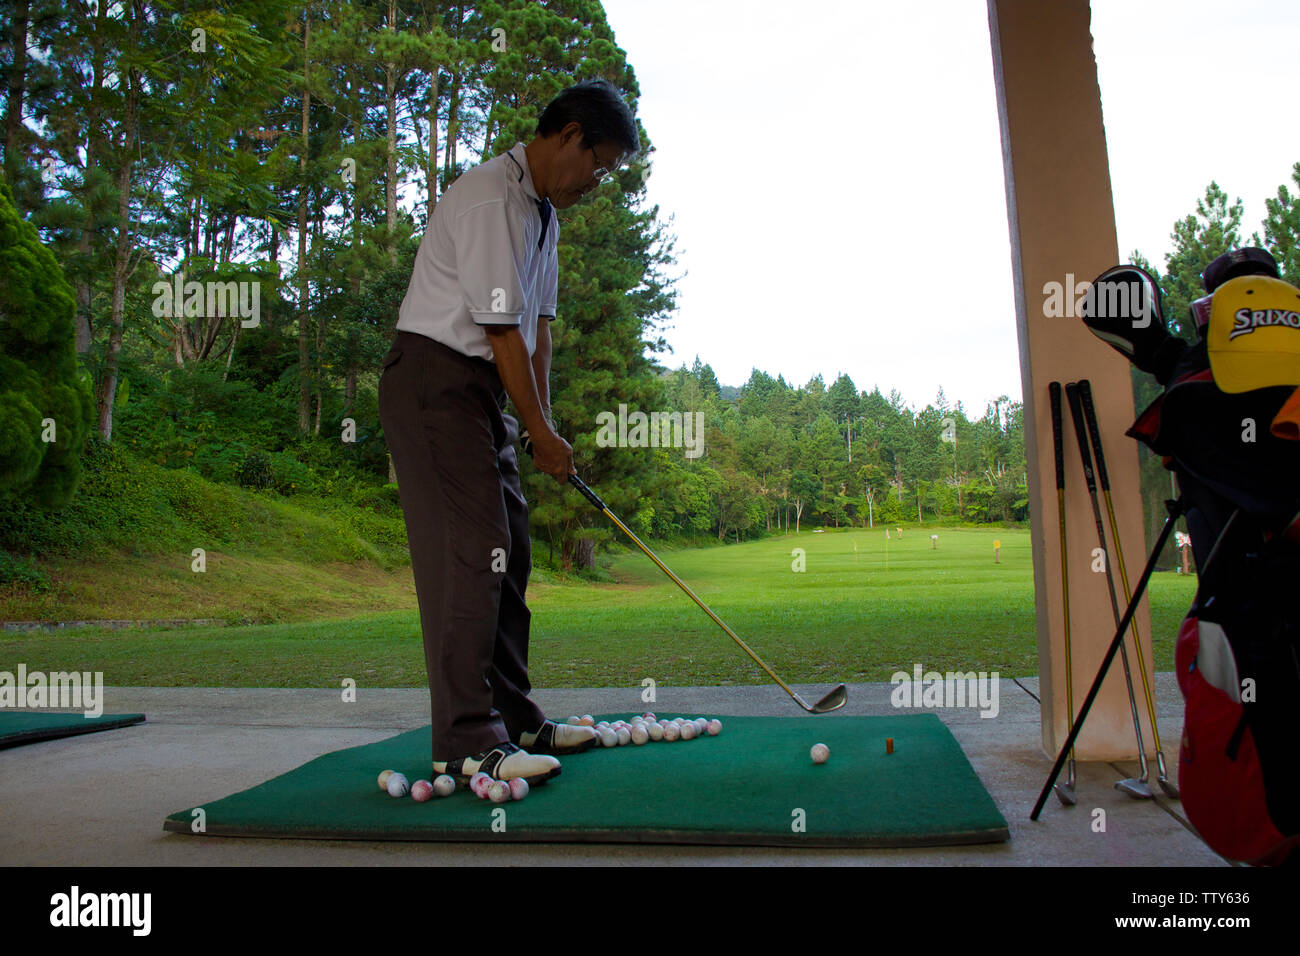 Man practicing golf at driving range Stock Photo